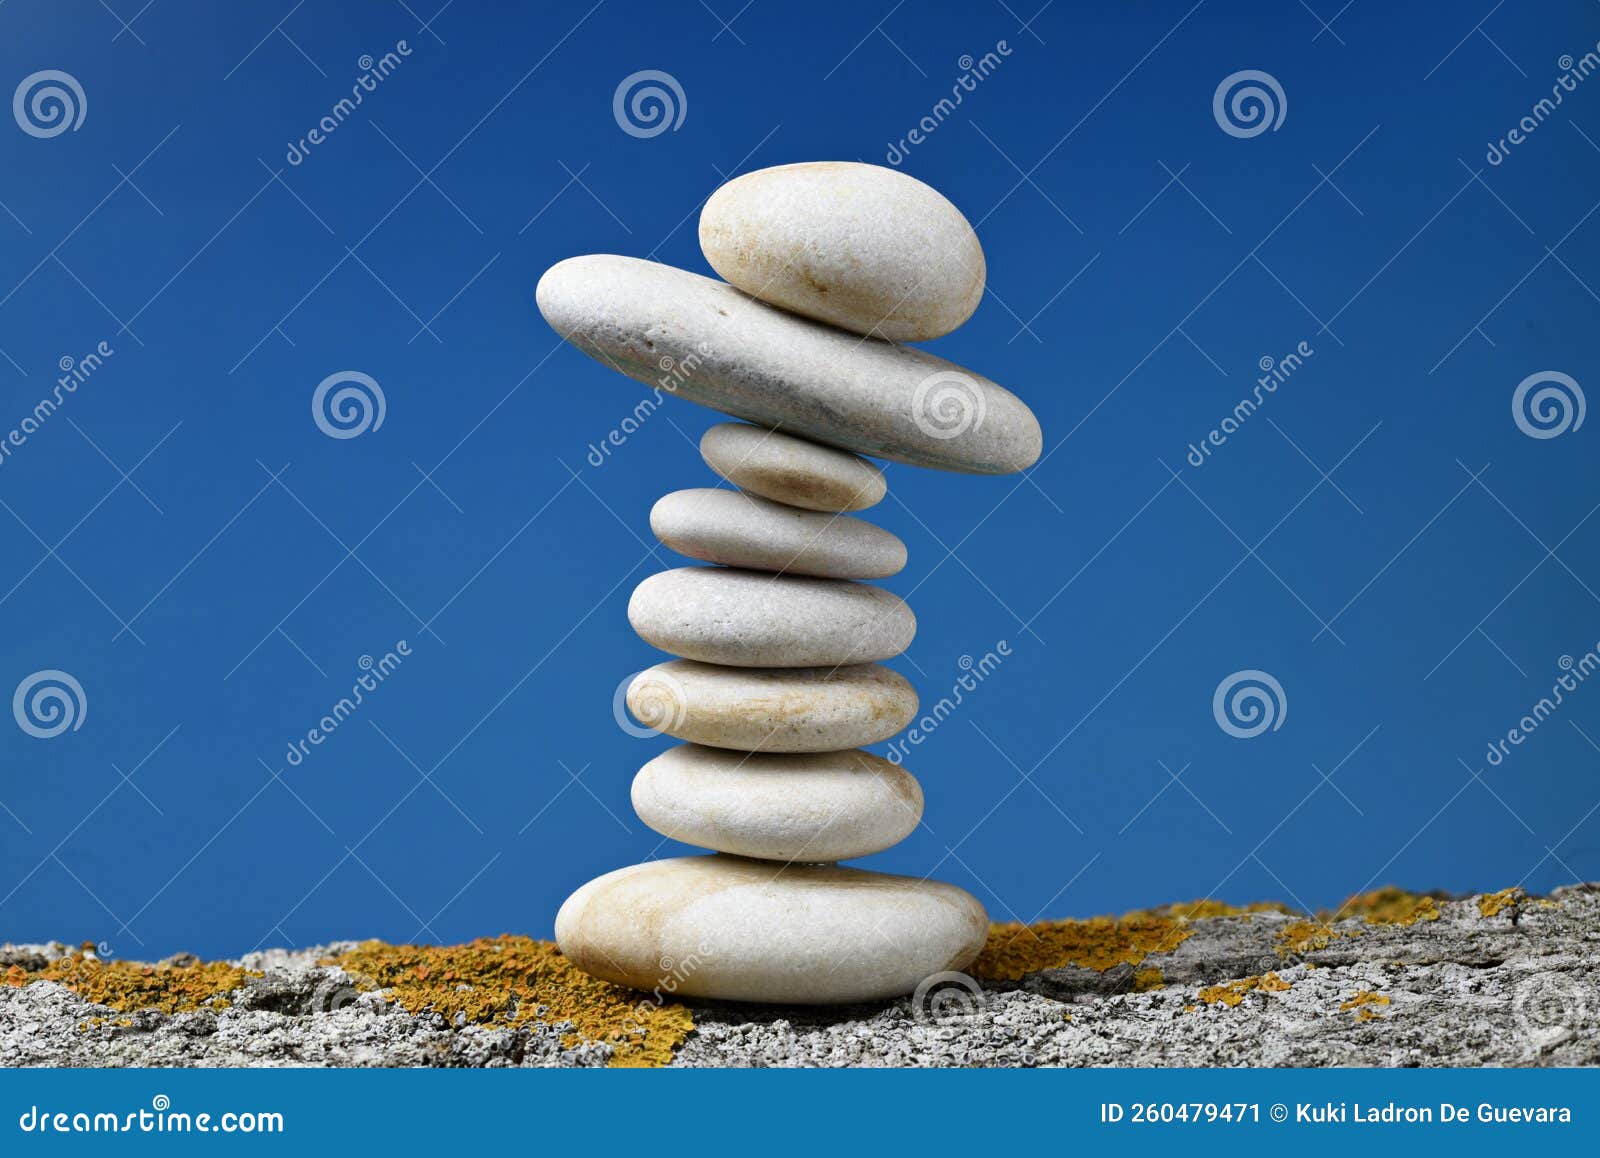 stacked stones keeping balance